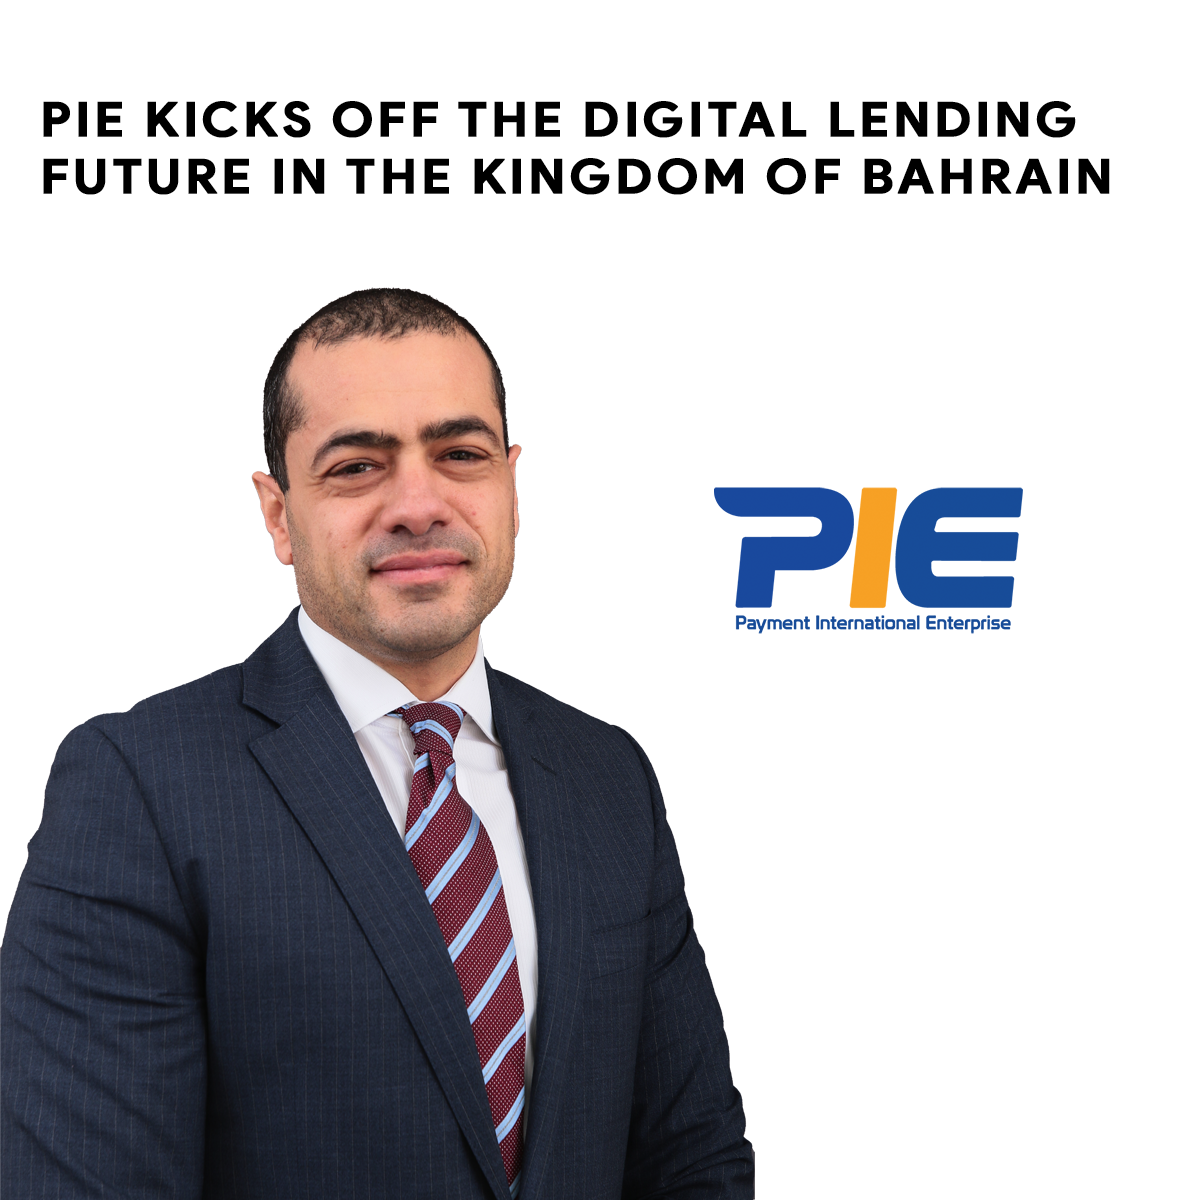 PAYMENT INTERNATIONAL ENTERPRISE KICKS OFF THE DIGITAL LENDING FUTURE IN THE KINGDOM OF BAHRAIN